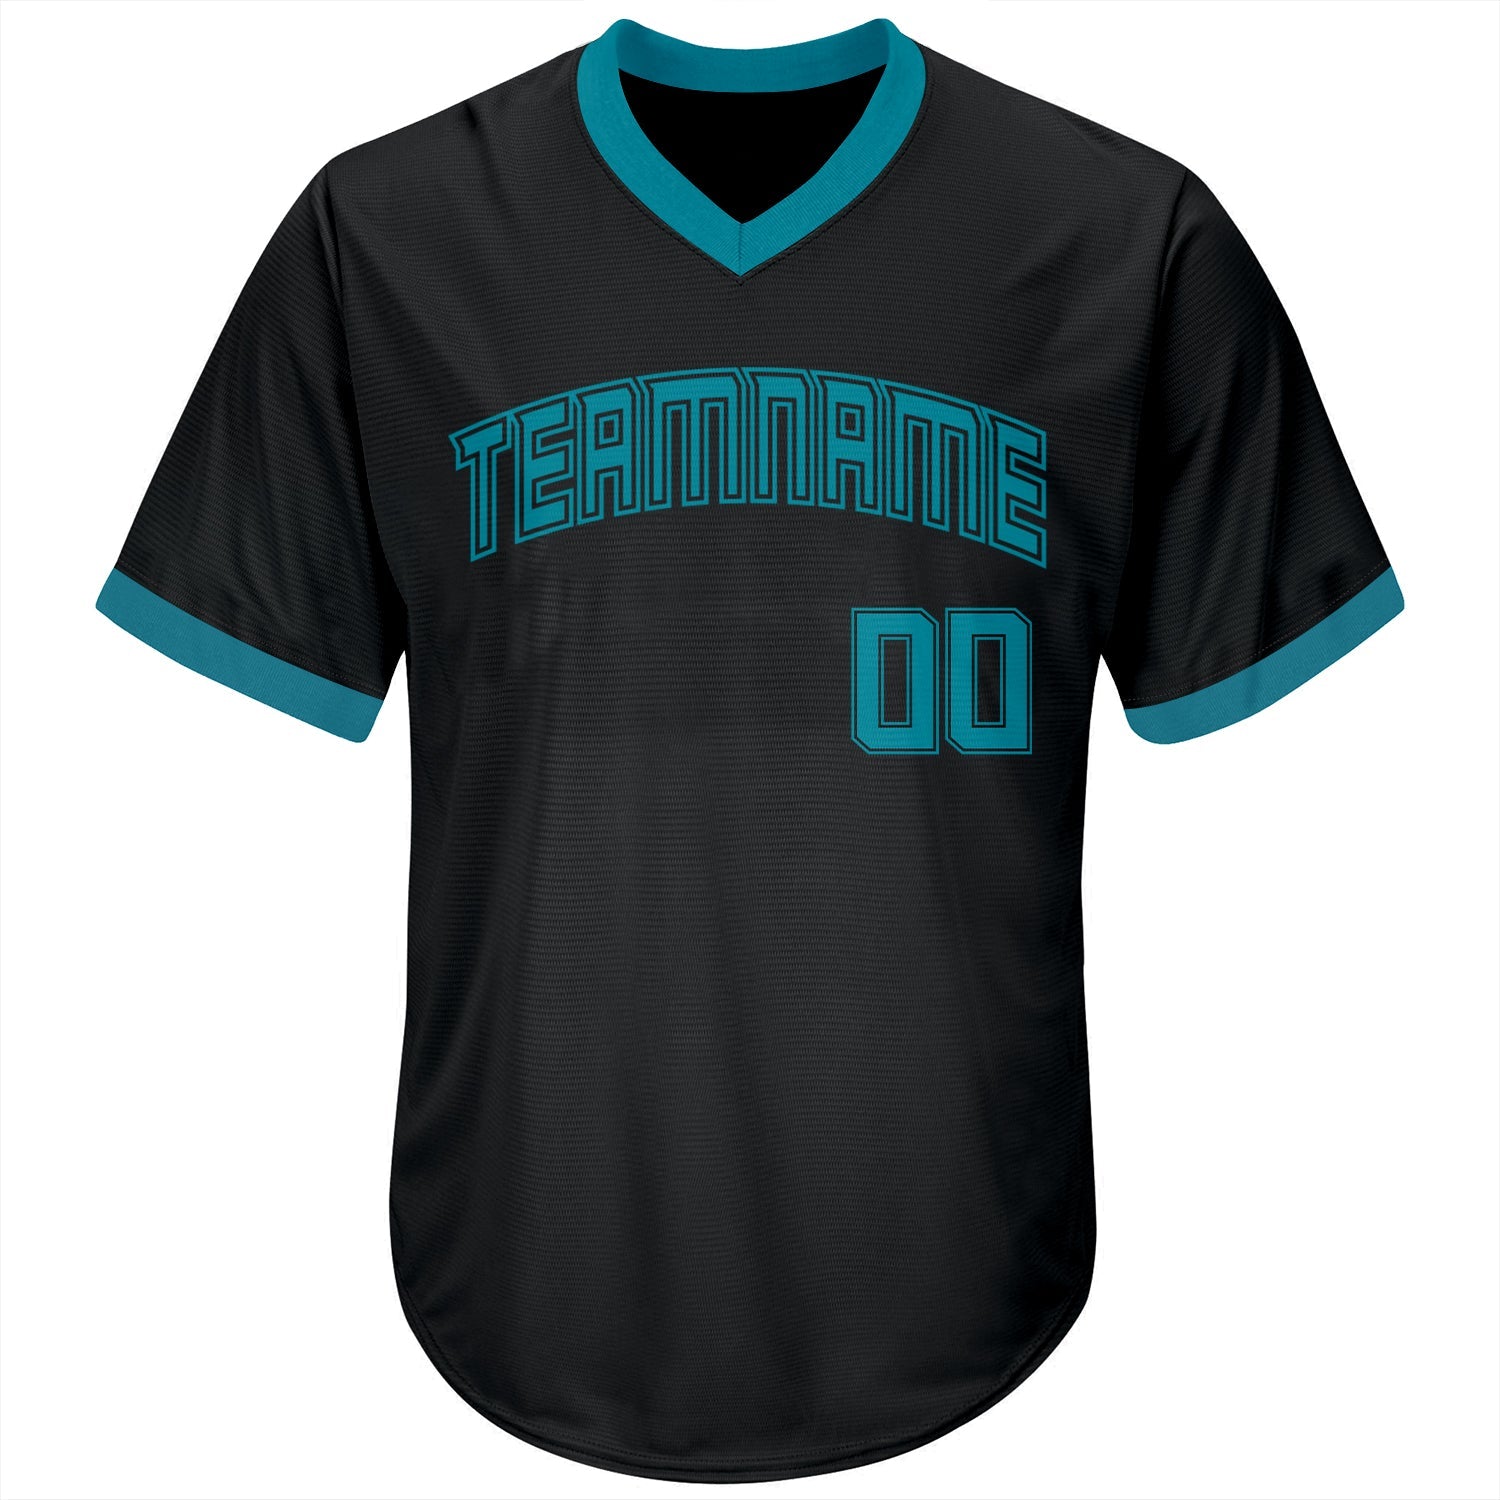 Custom Black Teal-Black Authentic Throwback Rib-Knit Baseball Jersey Shirt